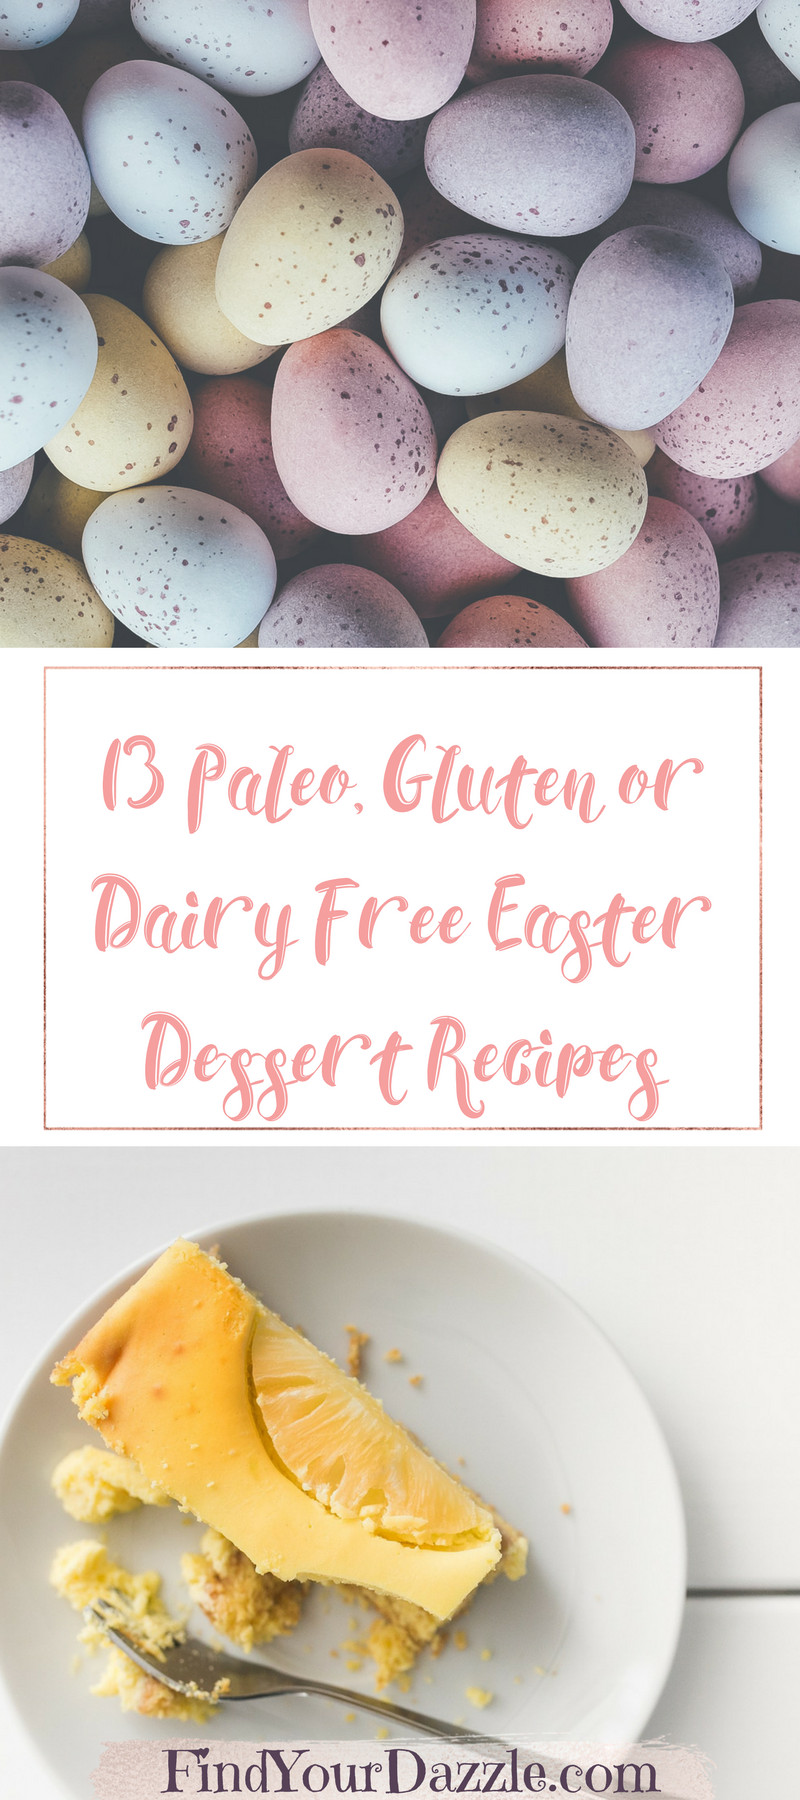 Gluten Free Easter Dessert Recipes
 13 Paleo Gluten or Dairy Free Easter Dessert Recipes